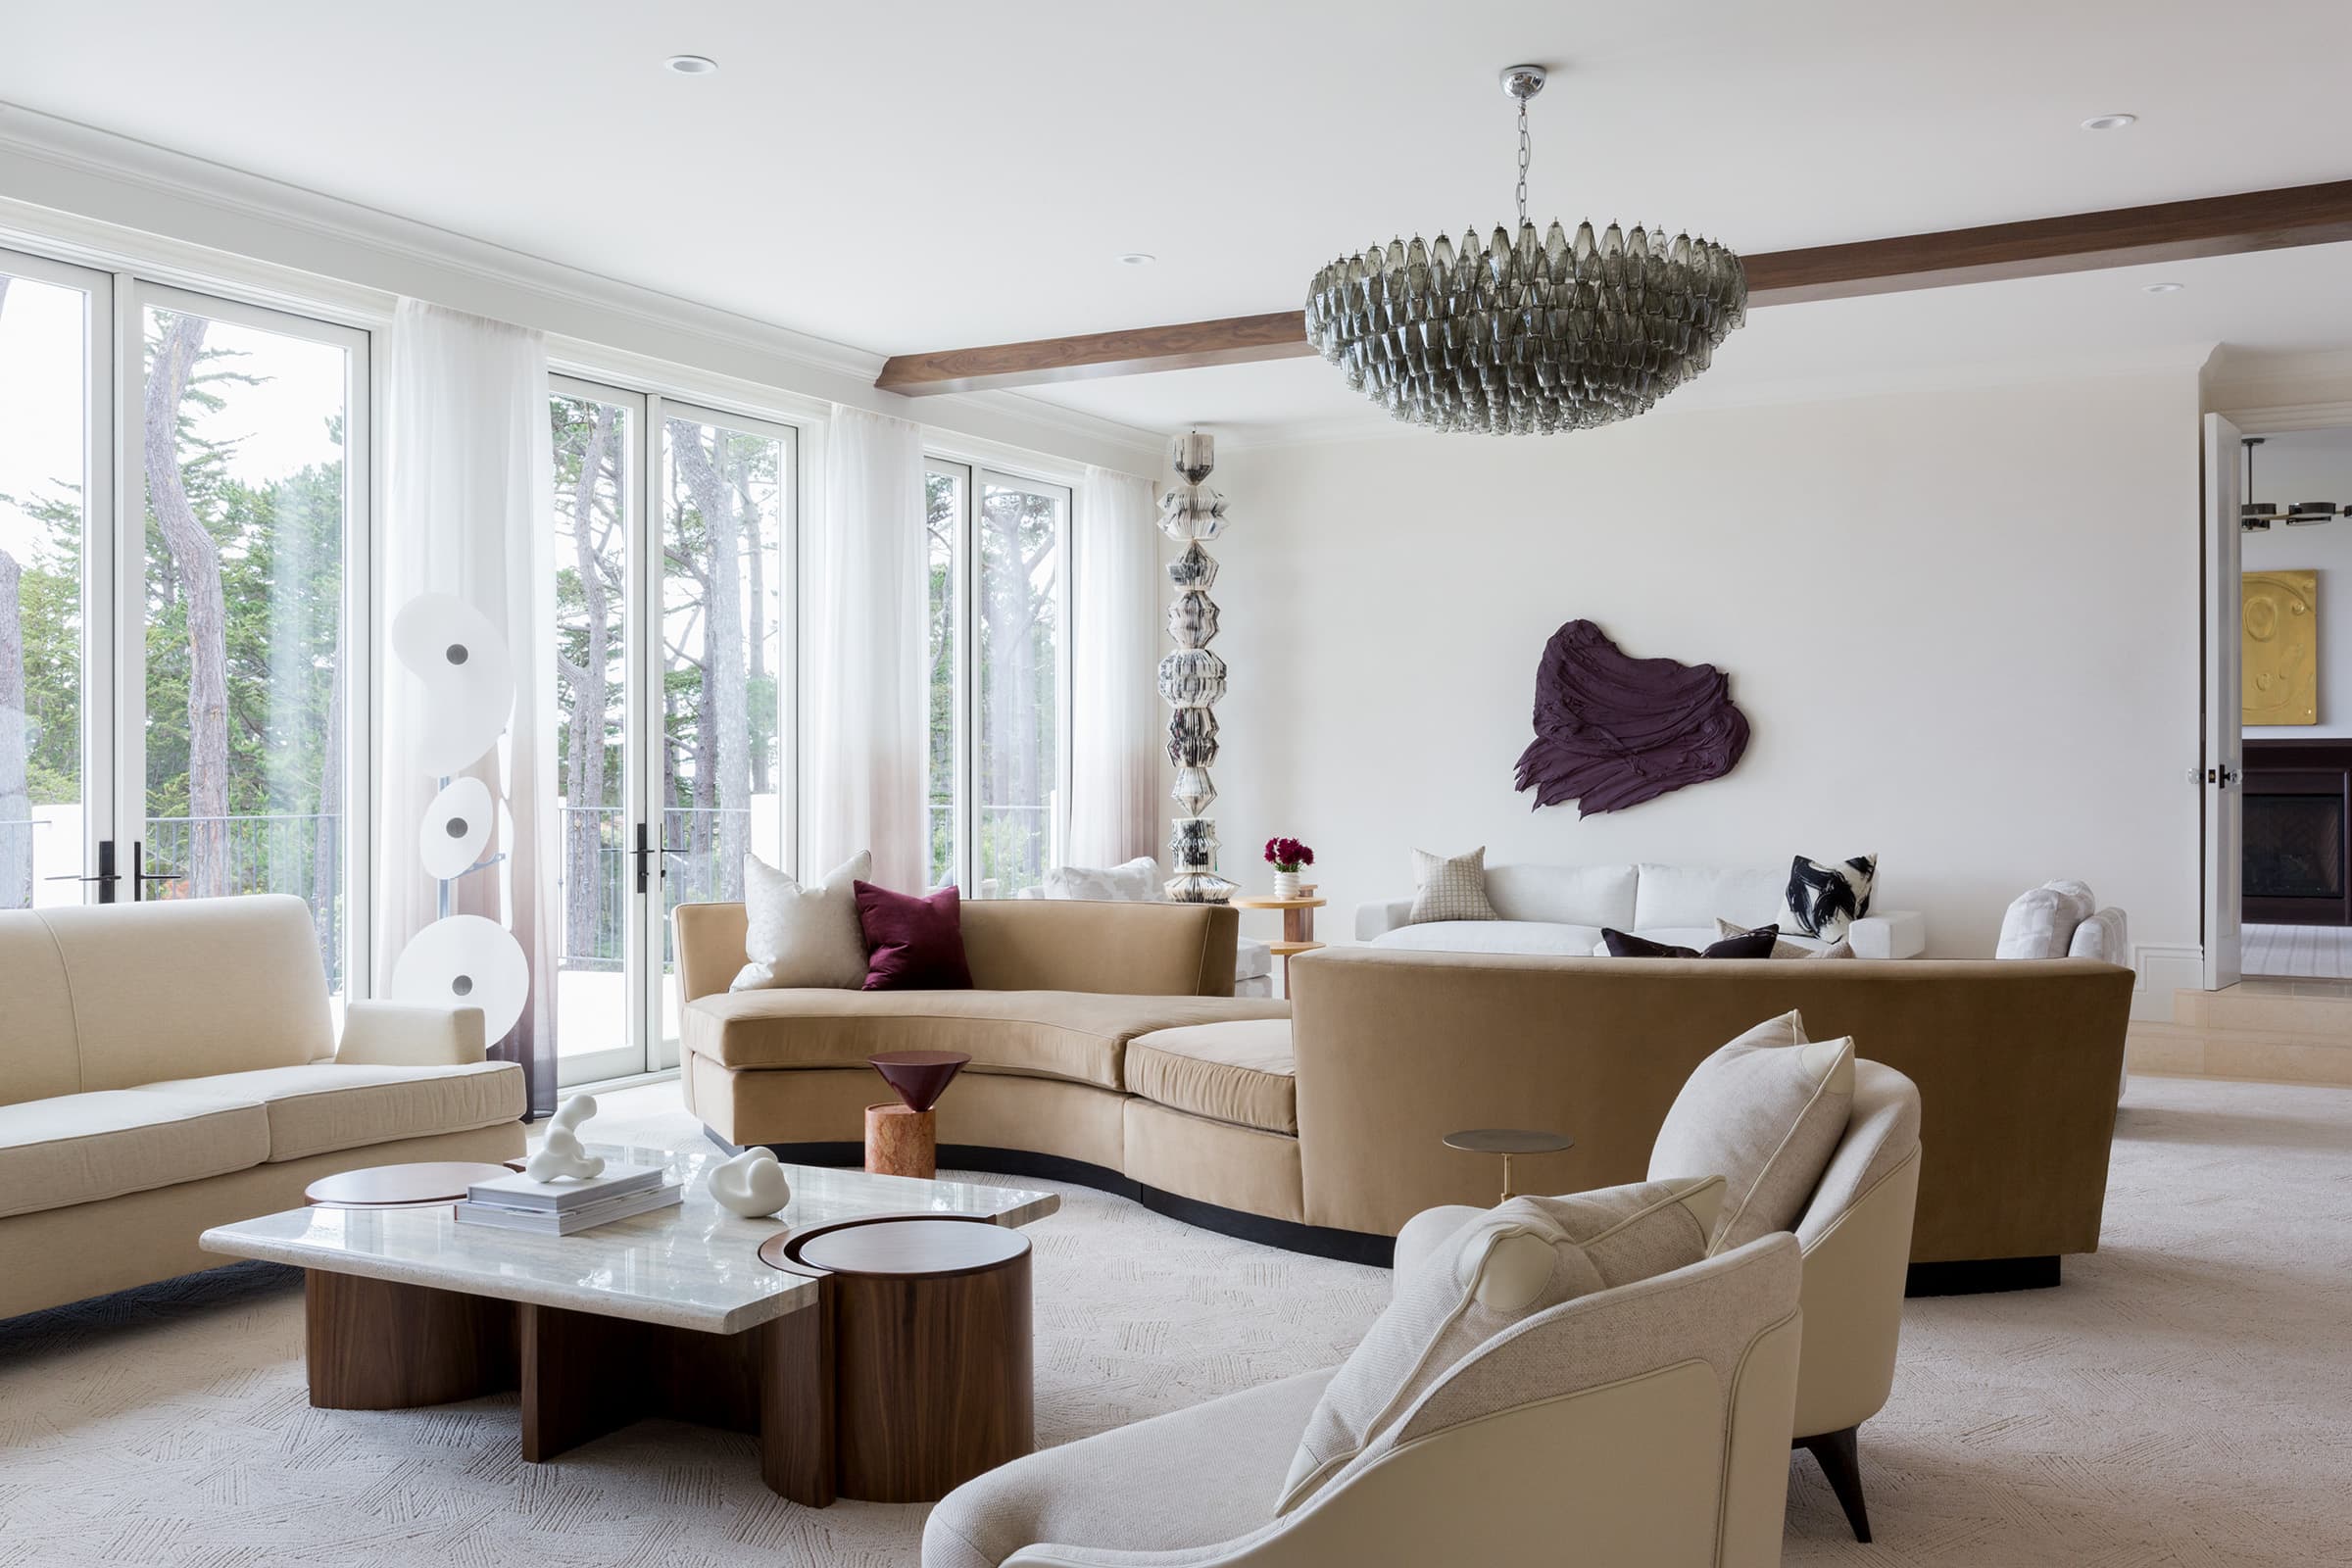 Viscaino Formal Living Room Interior Design by Laura U Design Collective in Pebble Beach, CA.